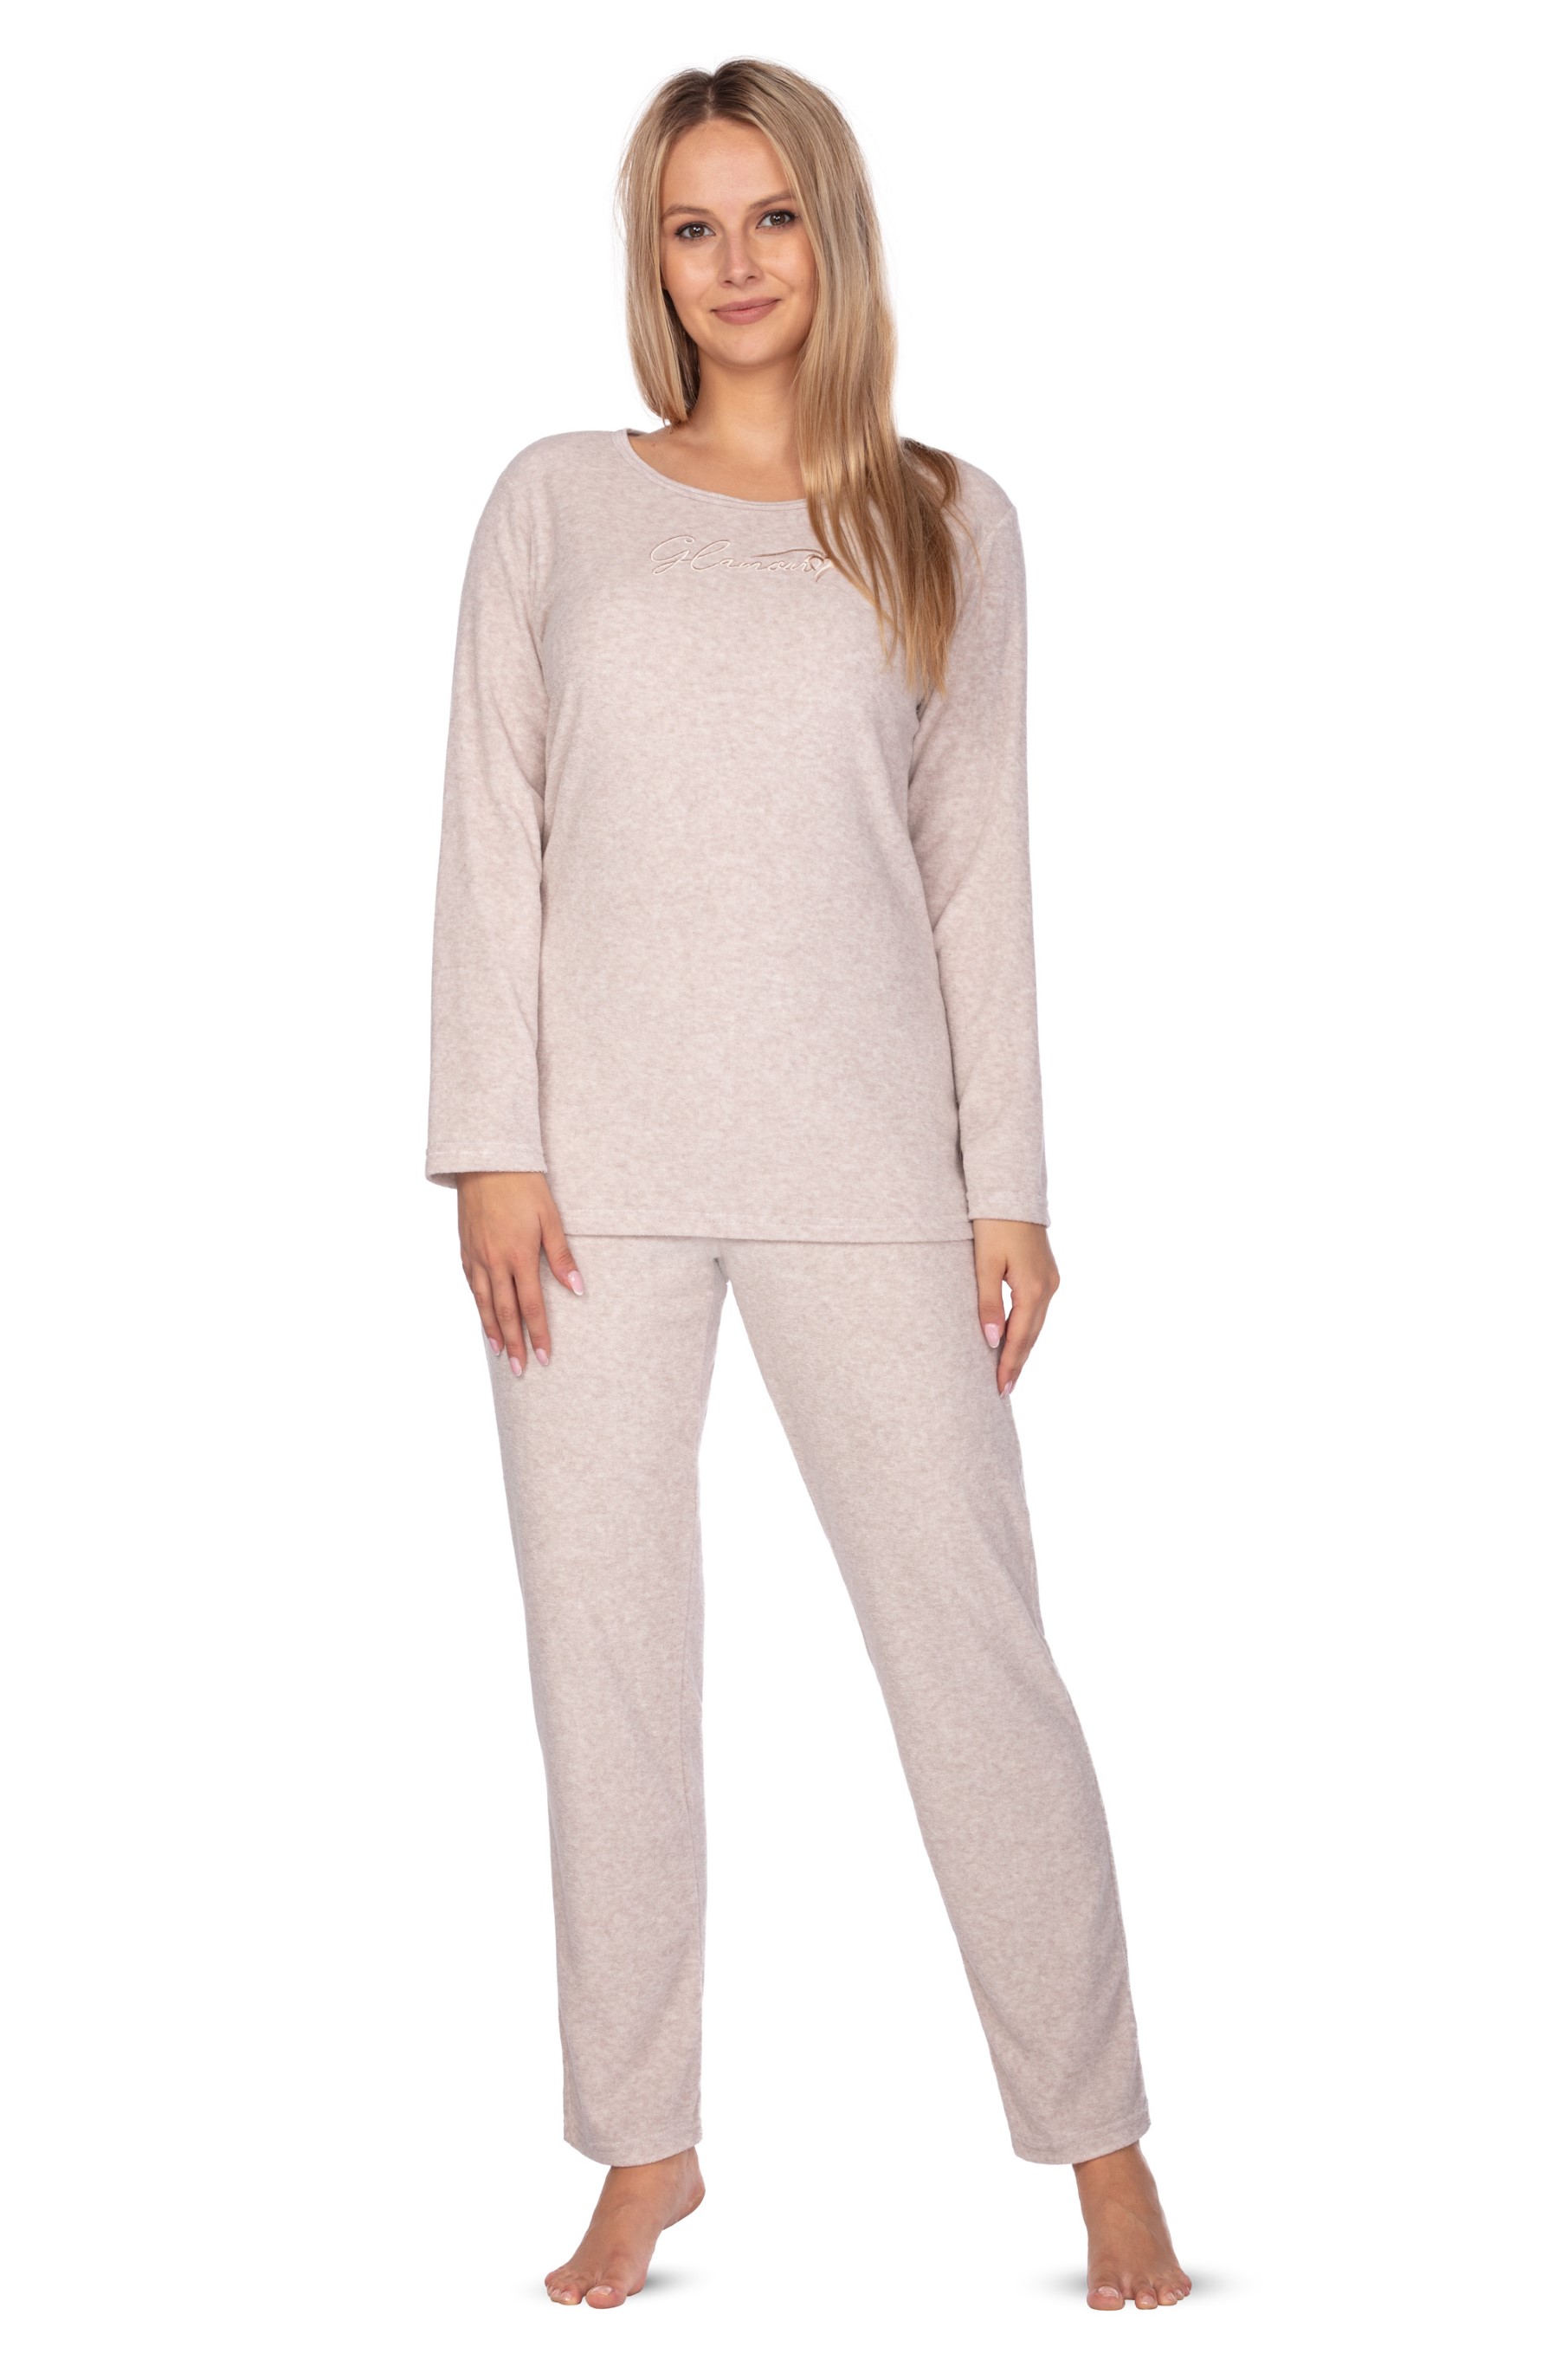 Regina 643 béžové froté dámské pyžamo Barva: béžová, Velikost: 2XL